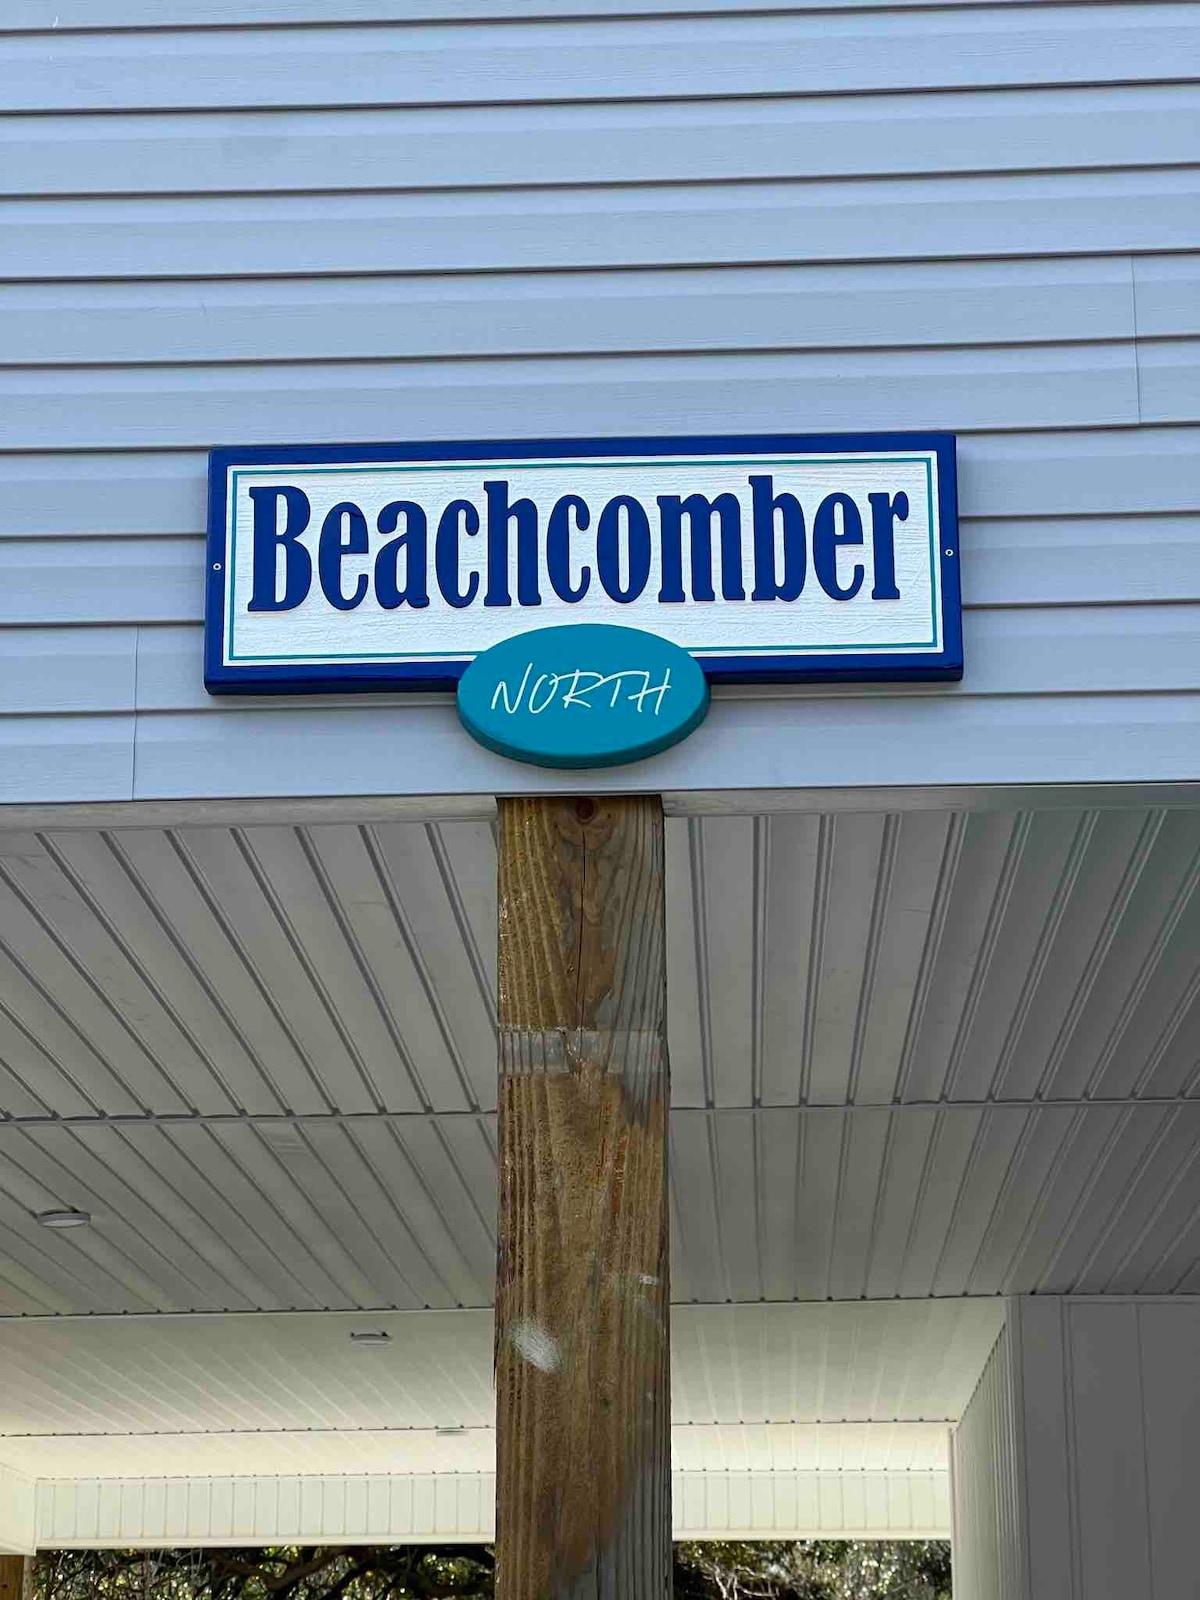 Beachcomber -允许携带狗入住、海滩和音响、电梯